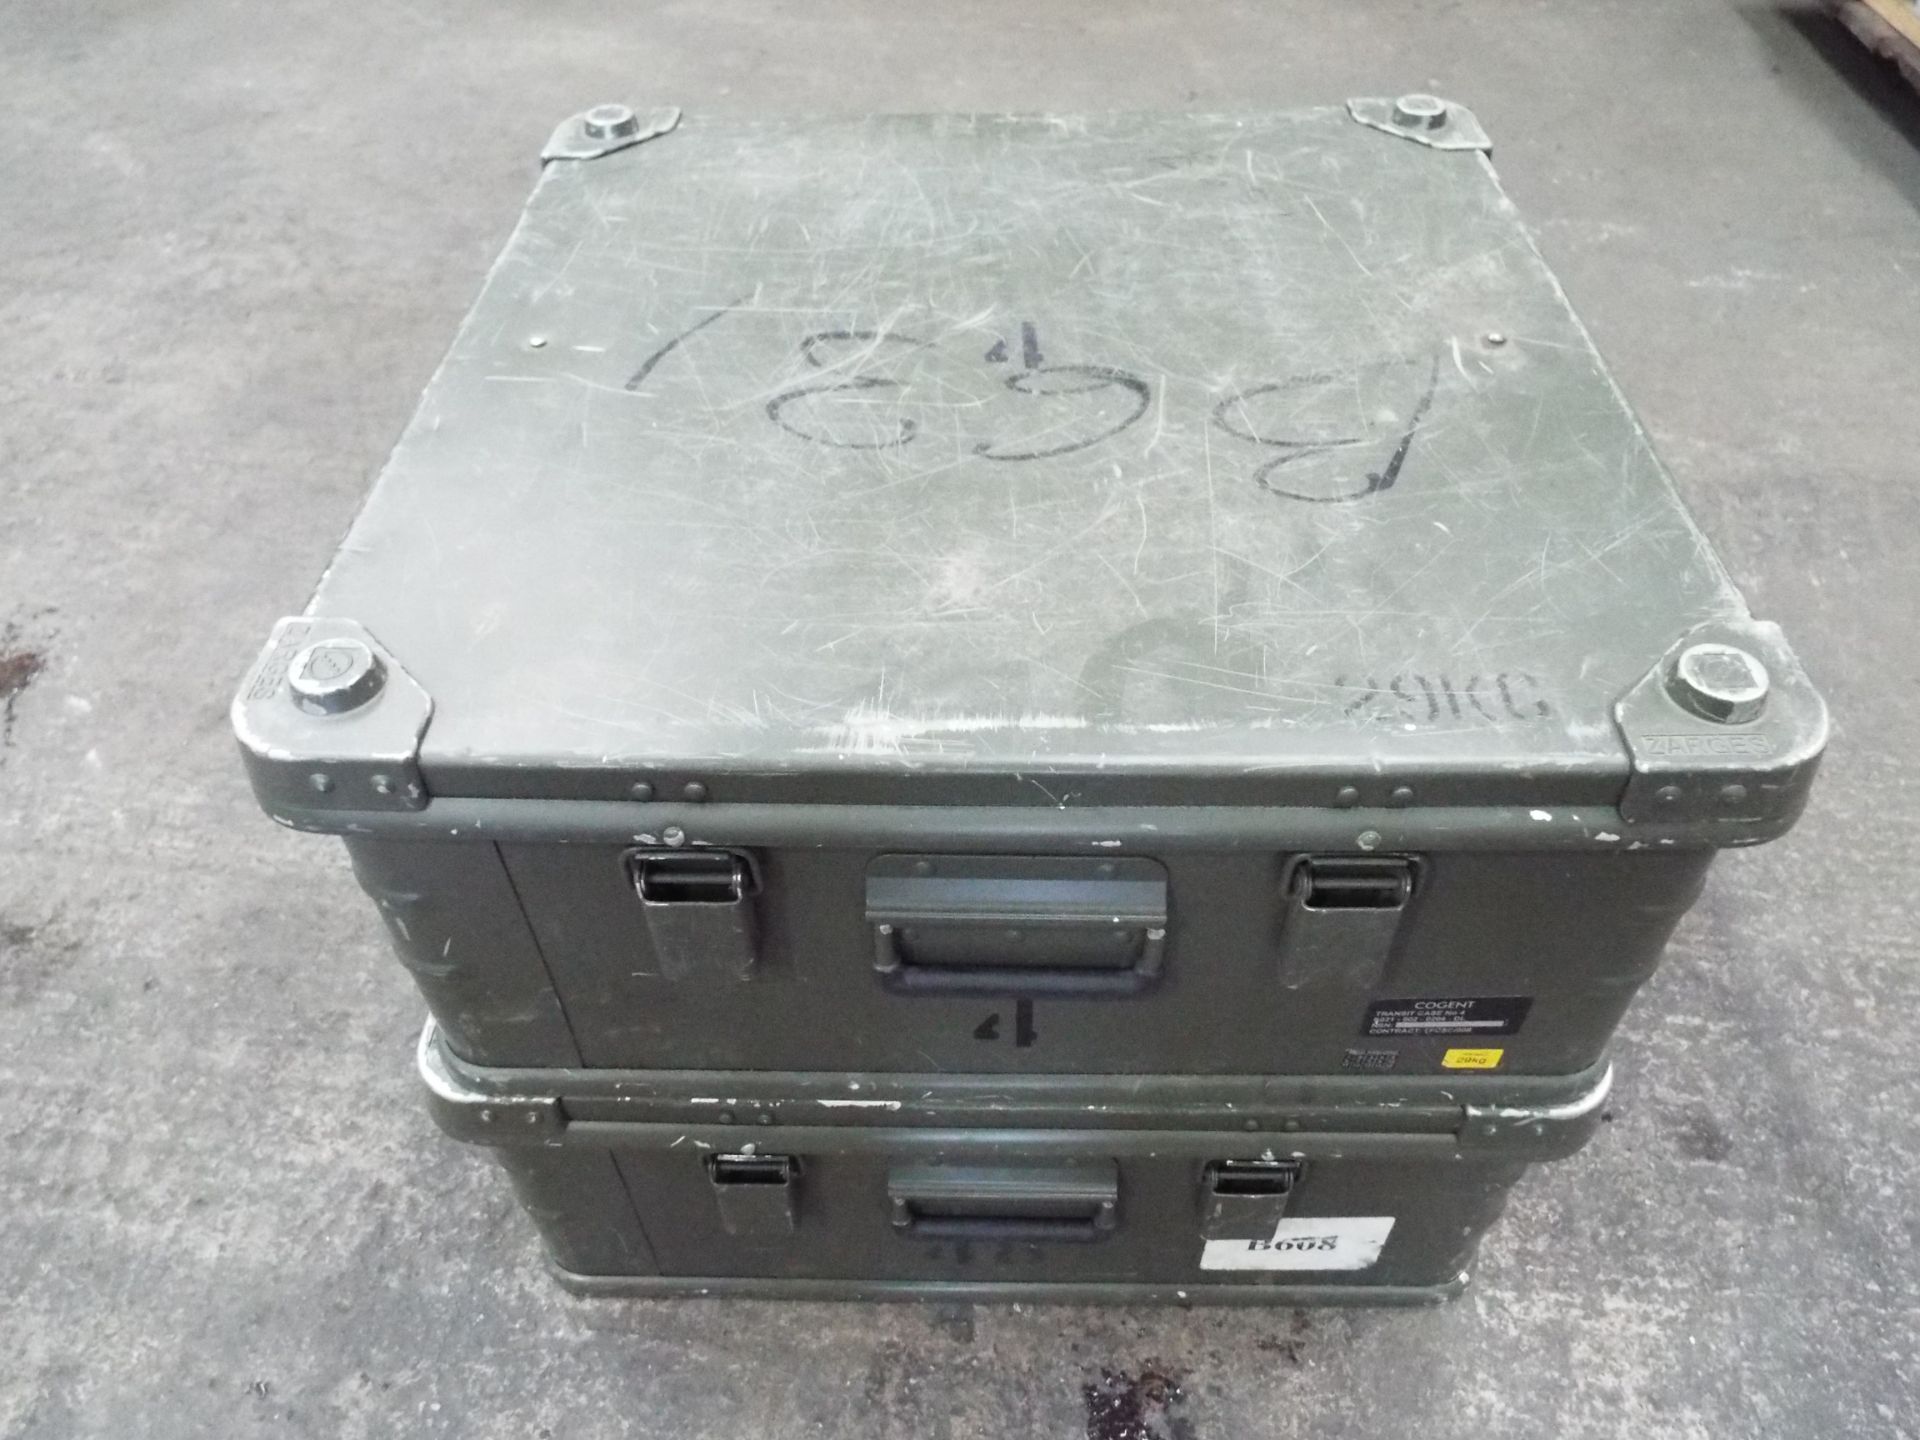 2 x Heavy Duty Zarges Aluminium Cases - Image 3 of 5